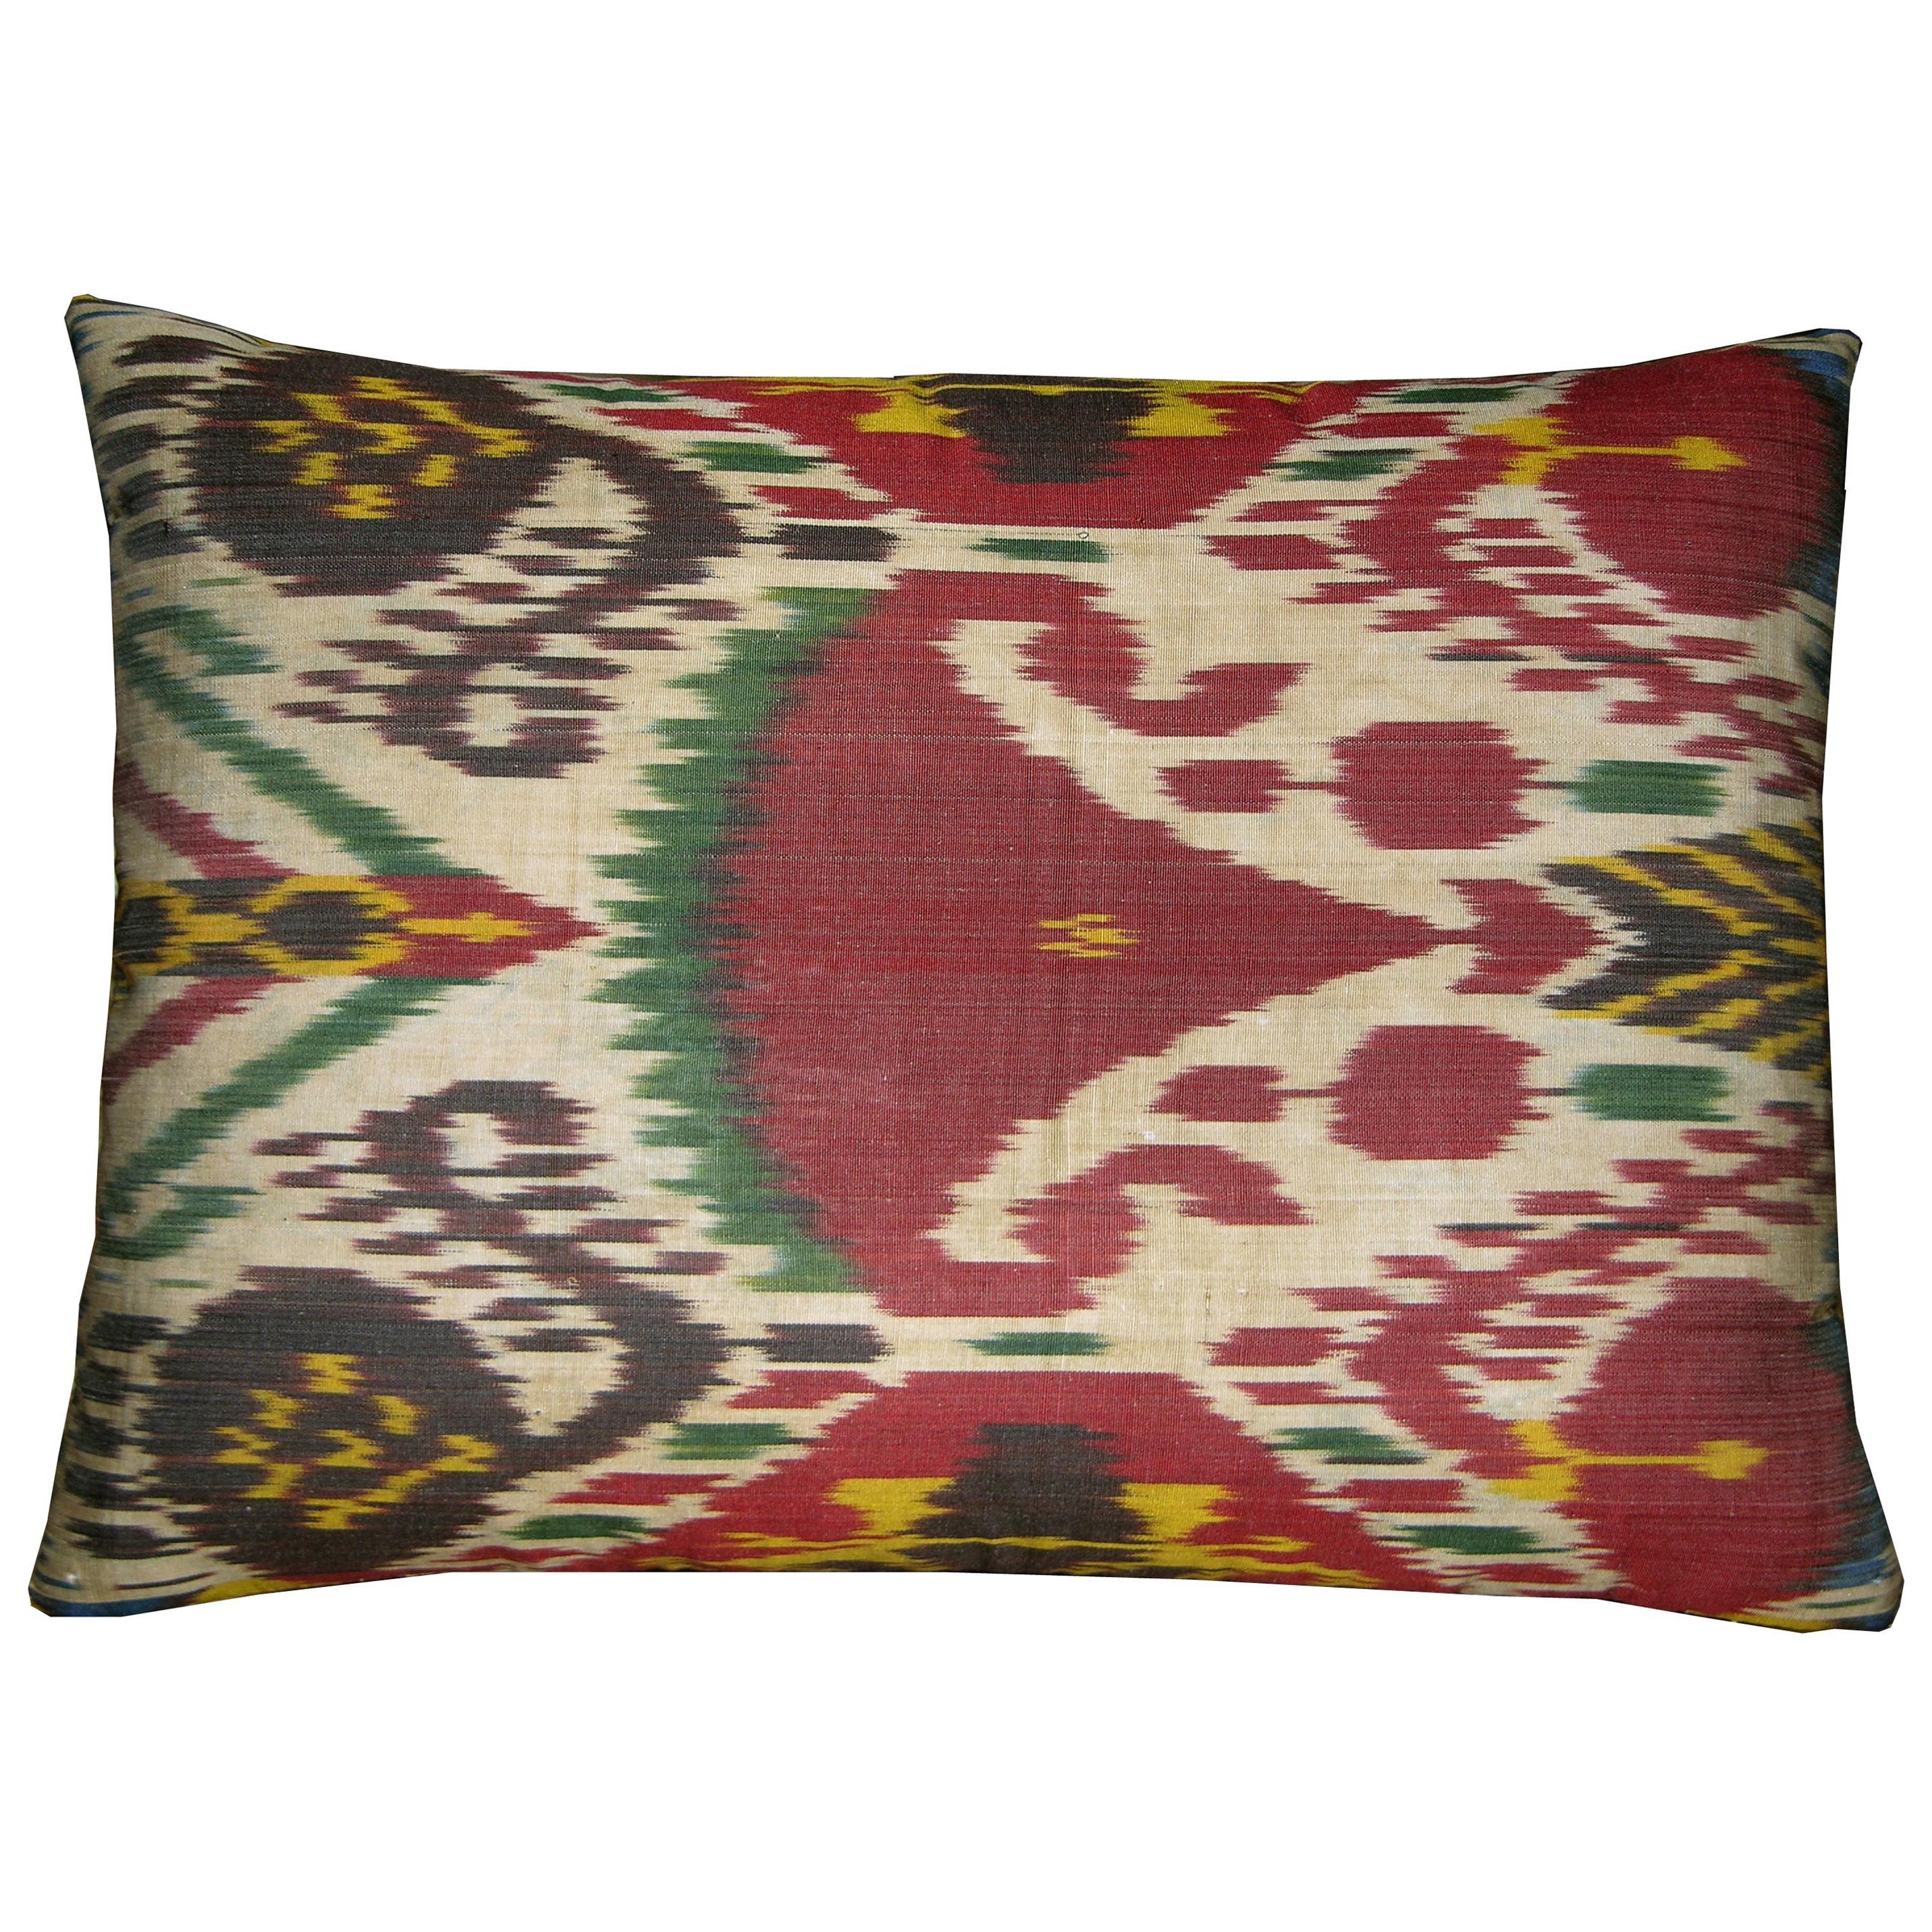 Circa 1900 Antique Ikat Tapestry Pillow